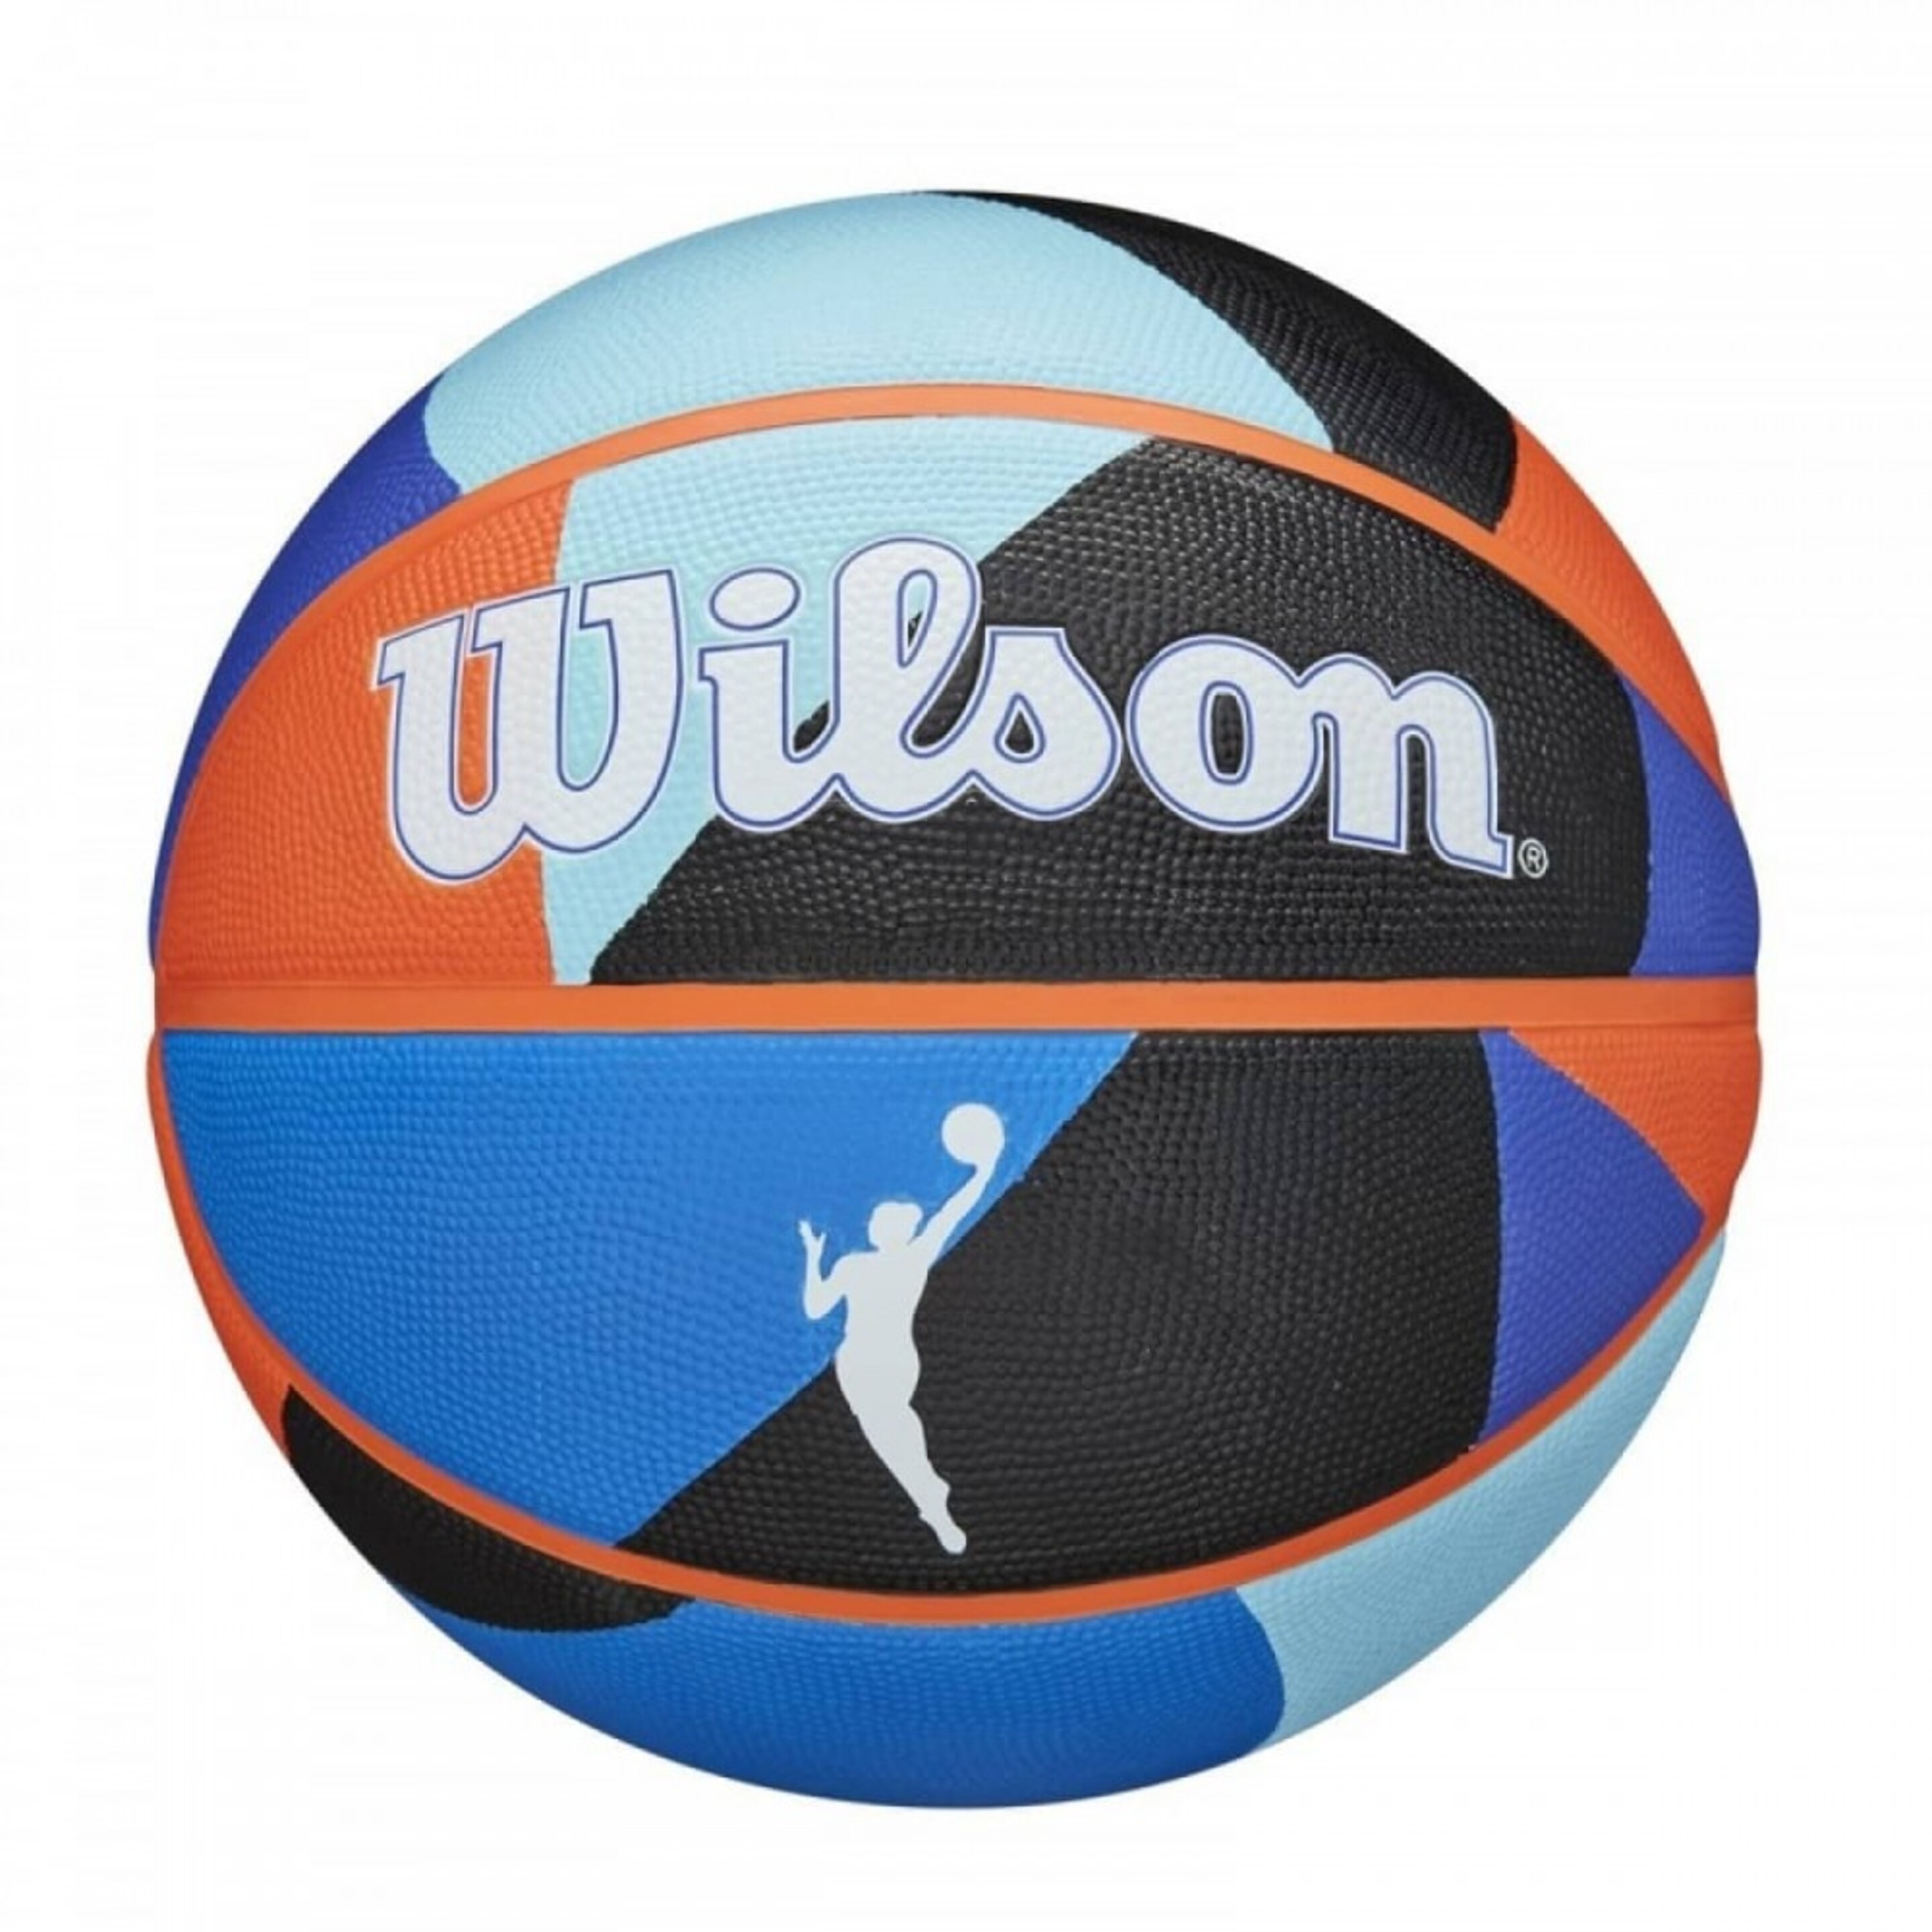 Pelota Baloncesto Wilson Wnba - azul-naranja - 